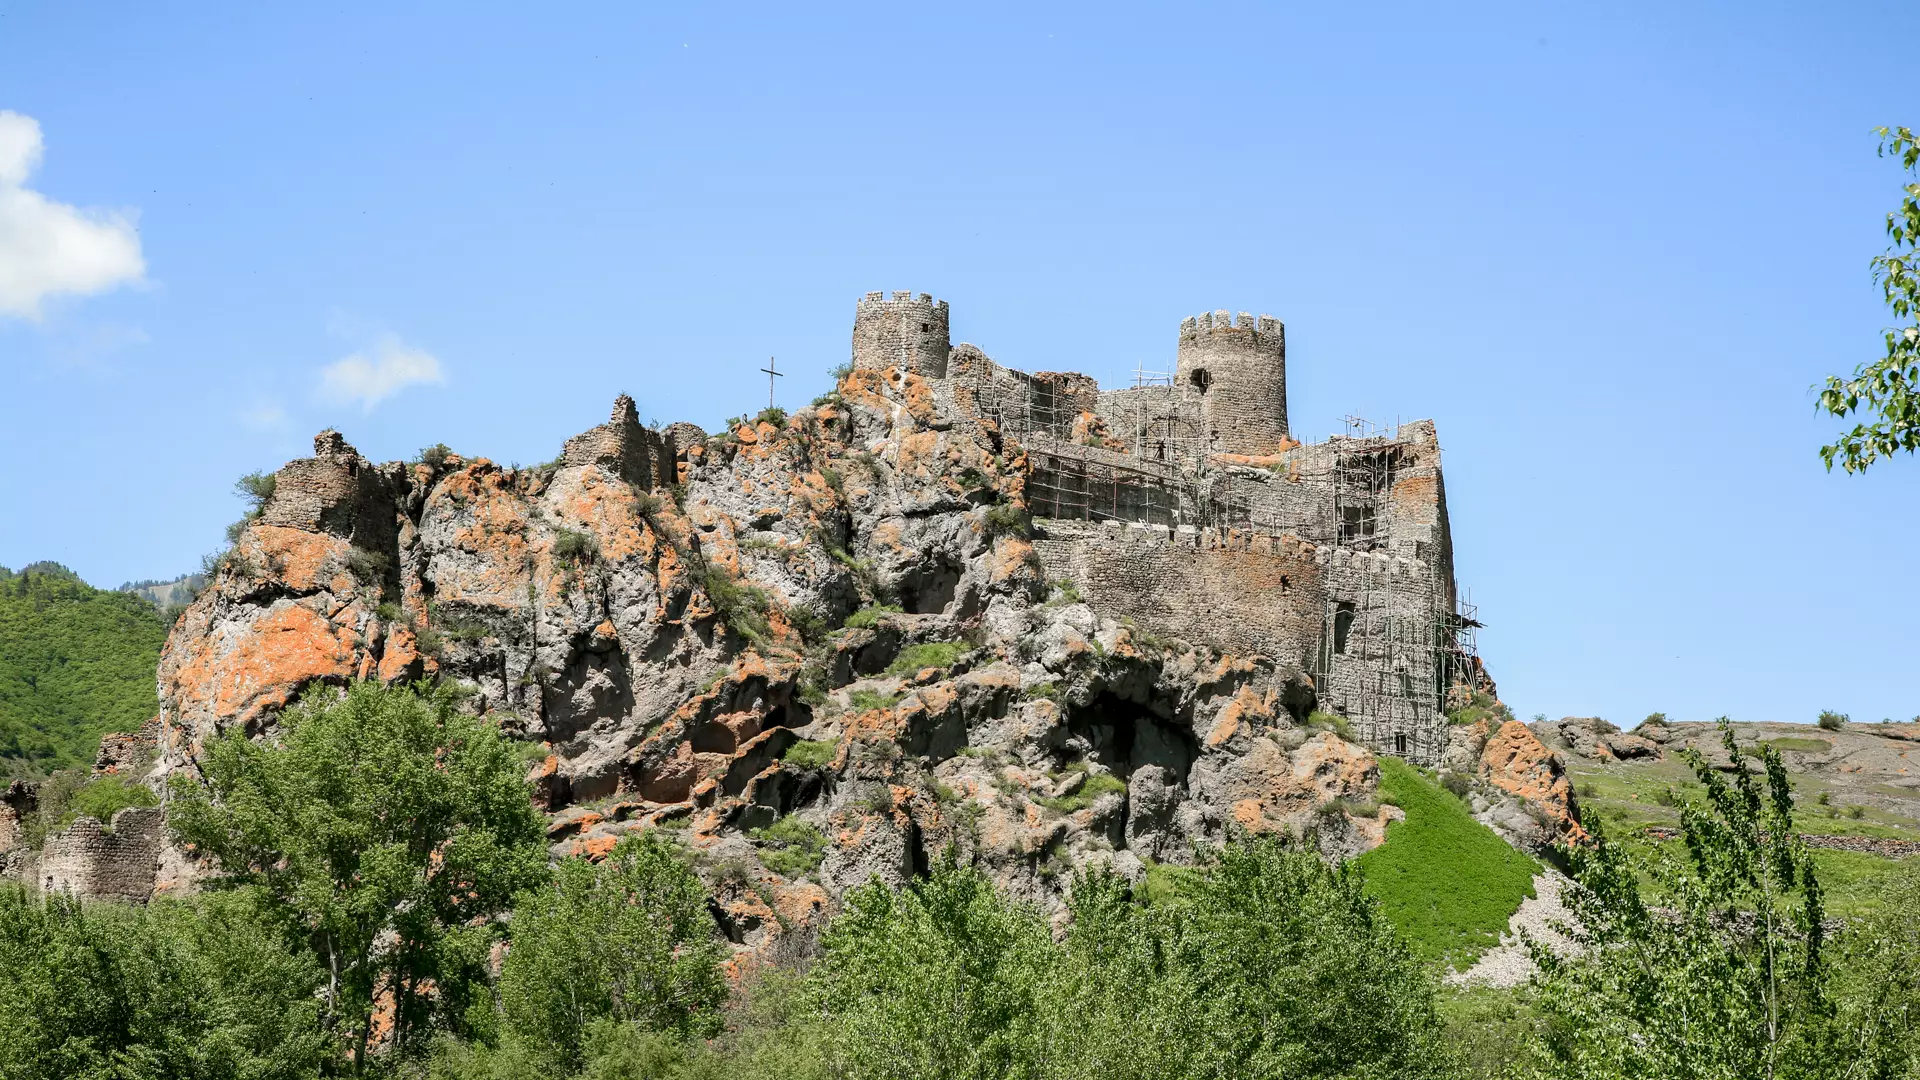 Atskuri Fortress